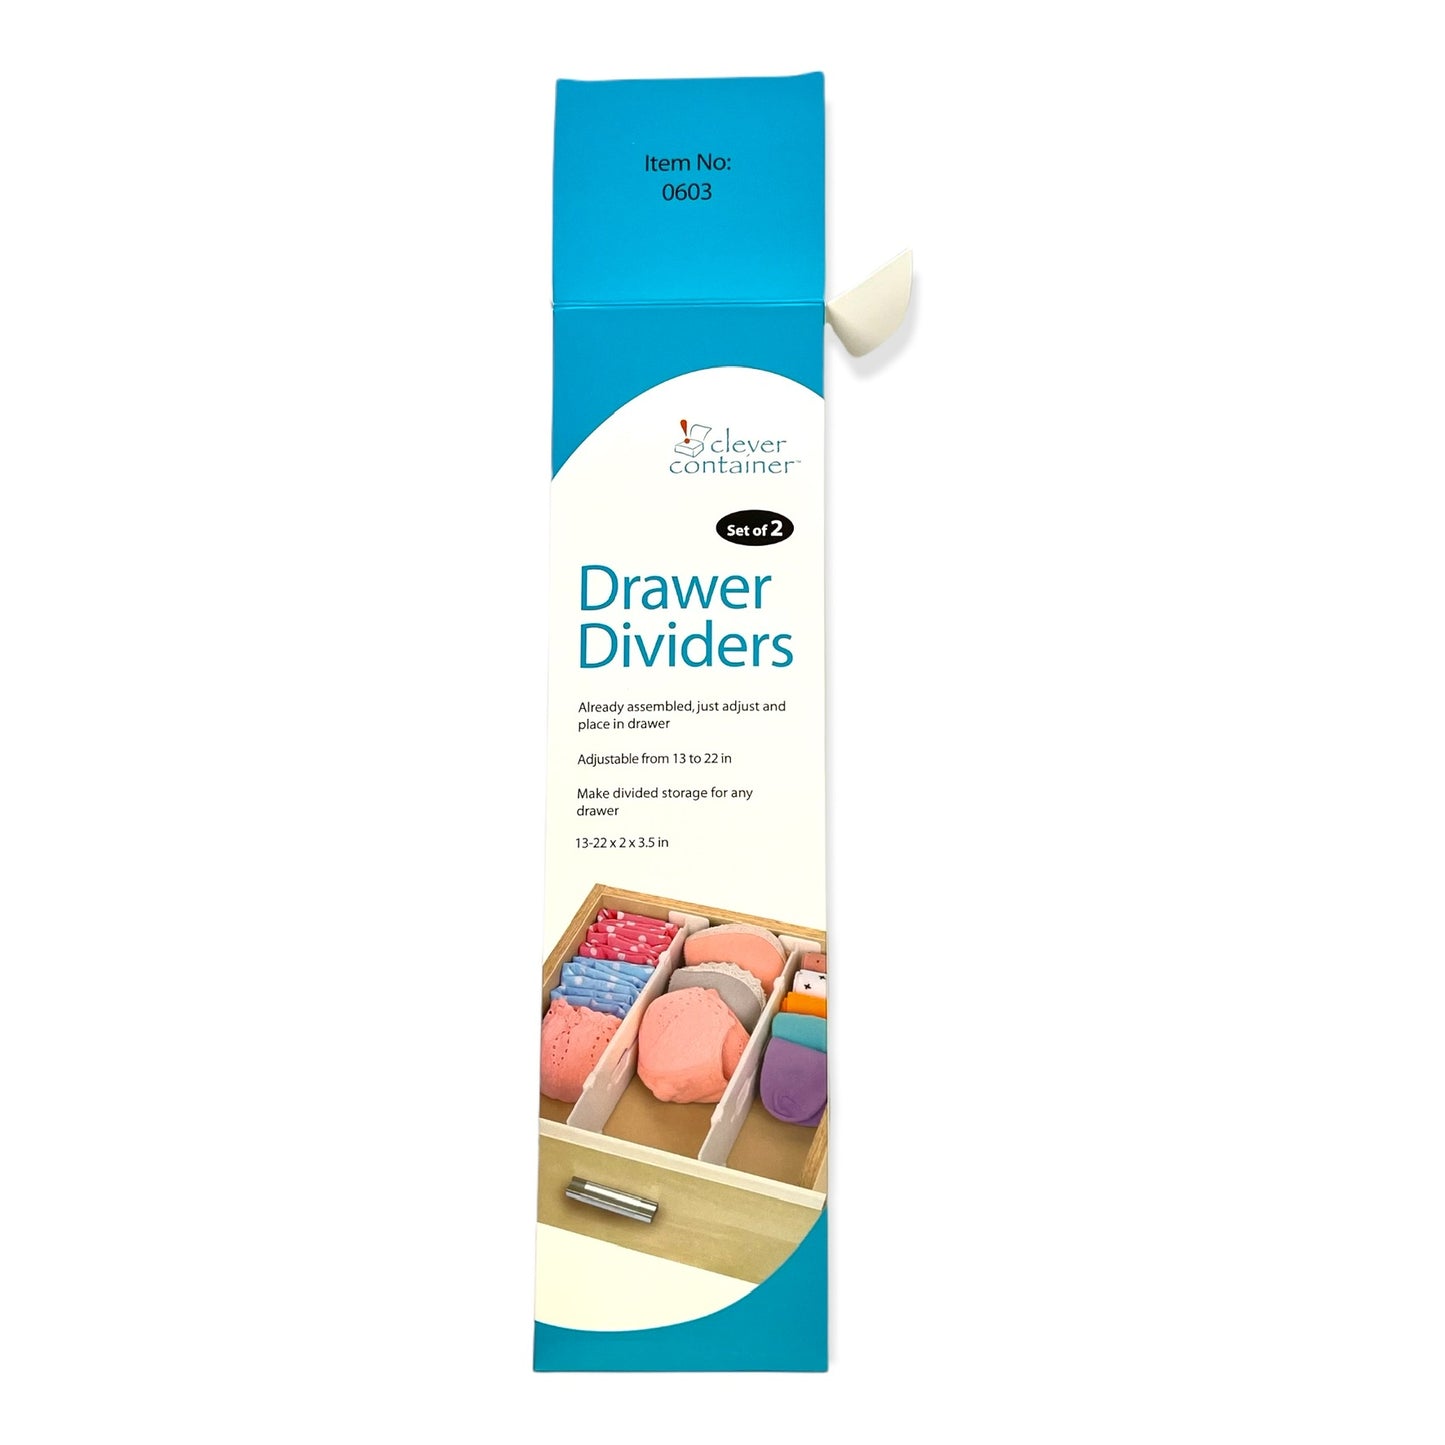 Drawer Dividers - Set of 2